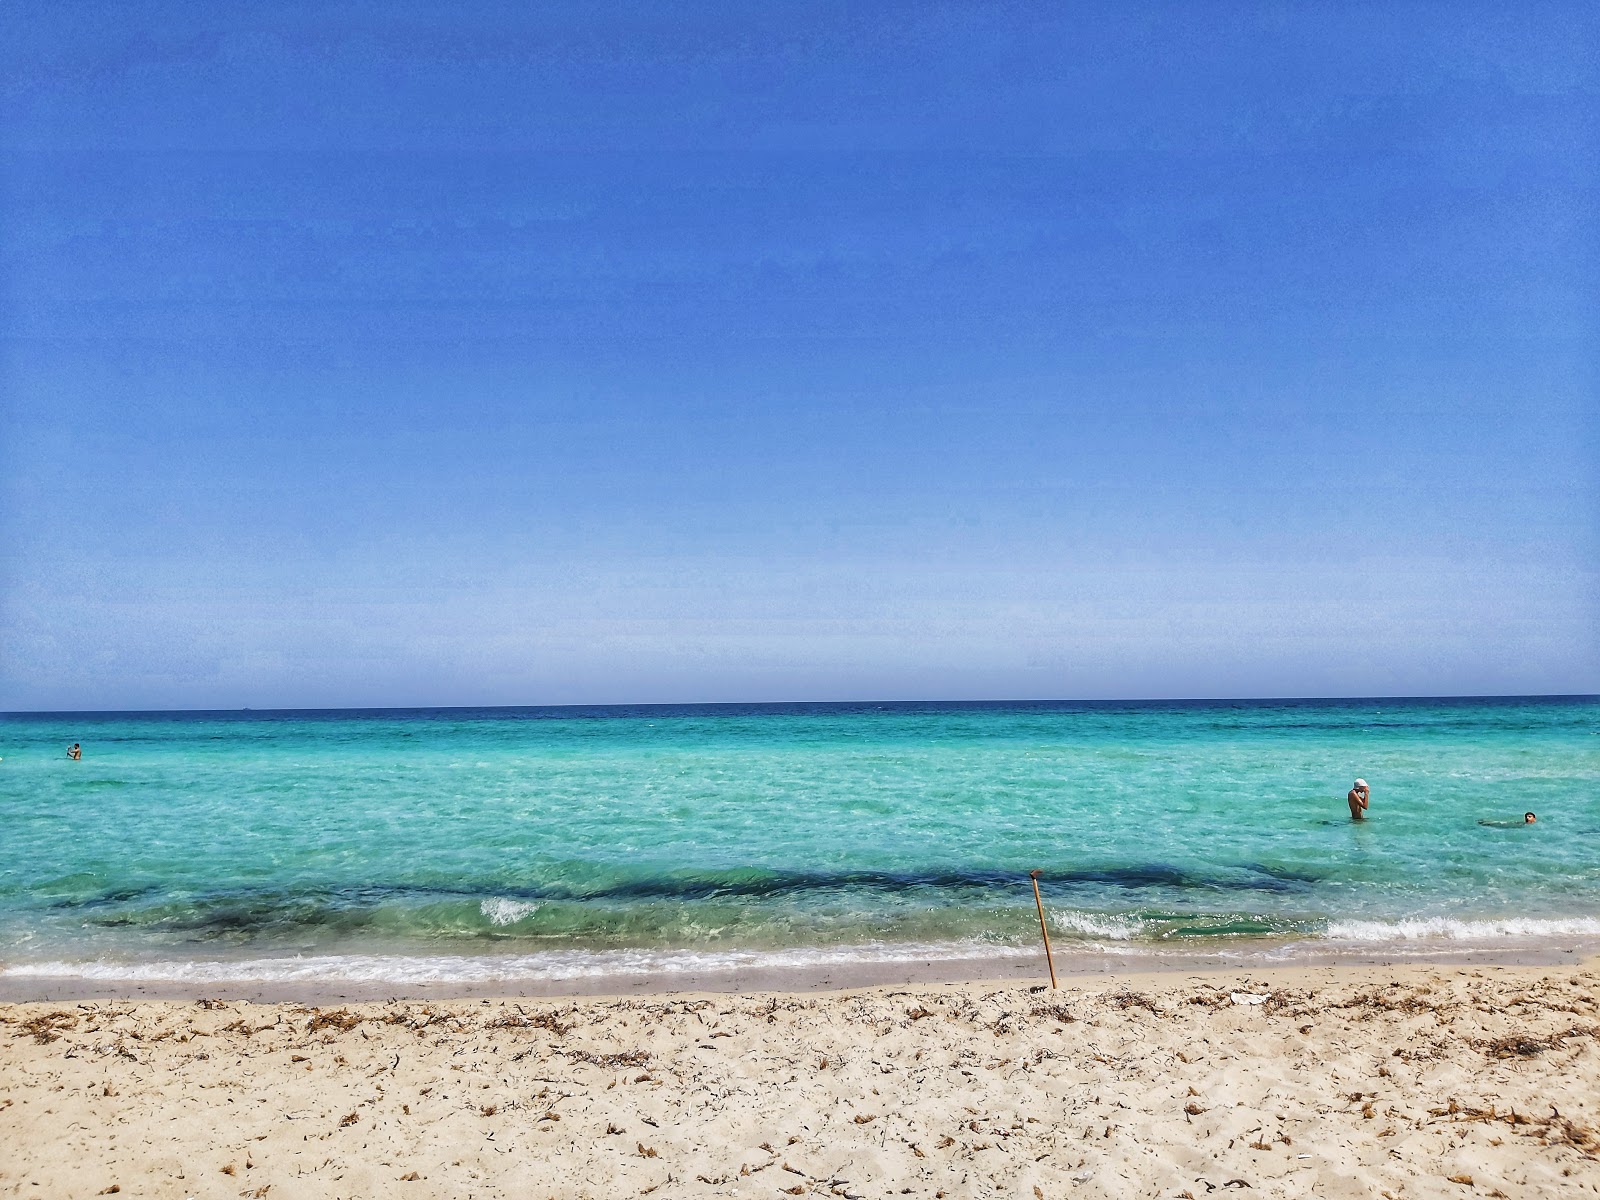 Tanit beach的照片 带有蓝色纯水表面